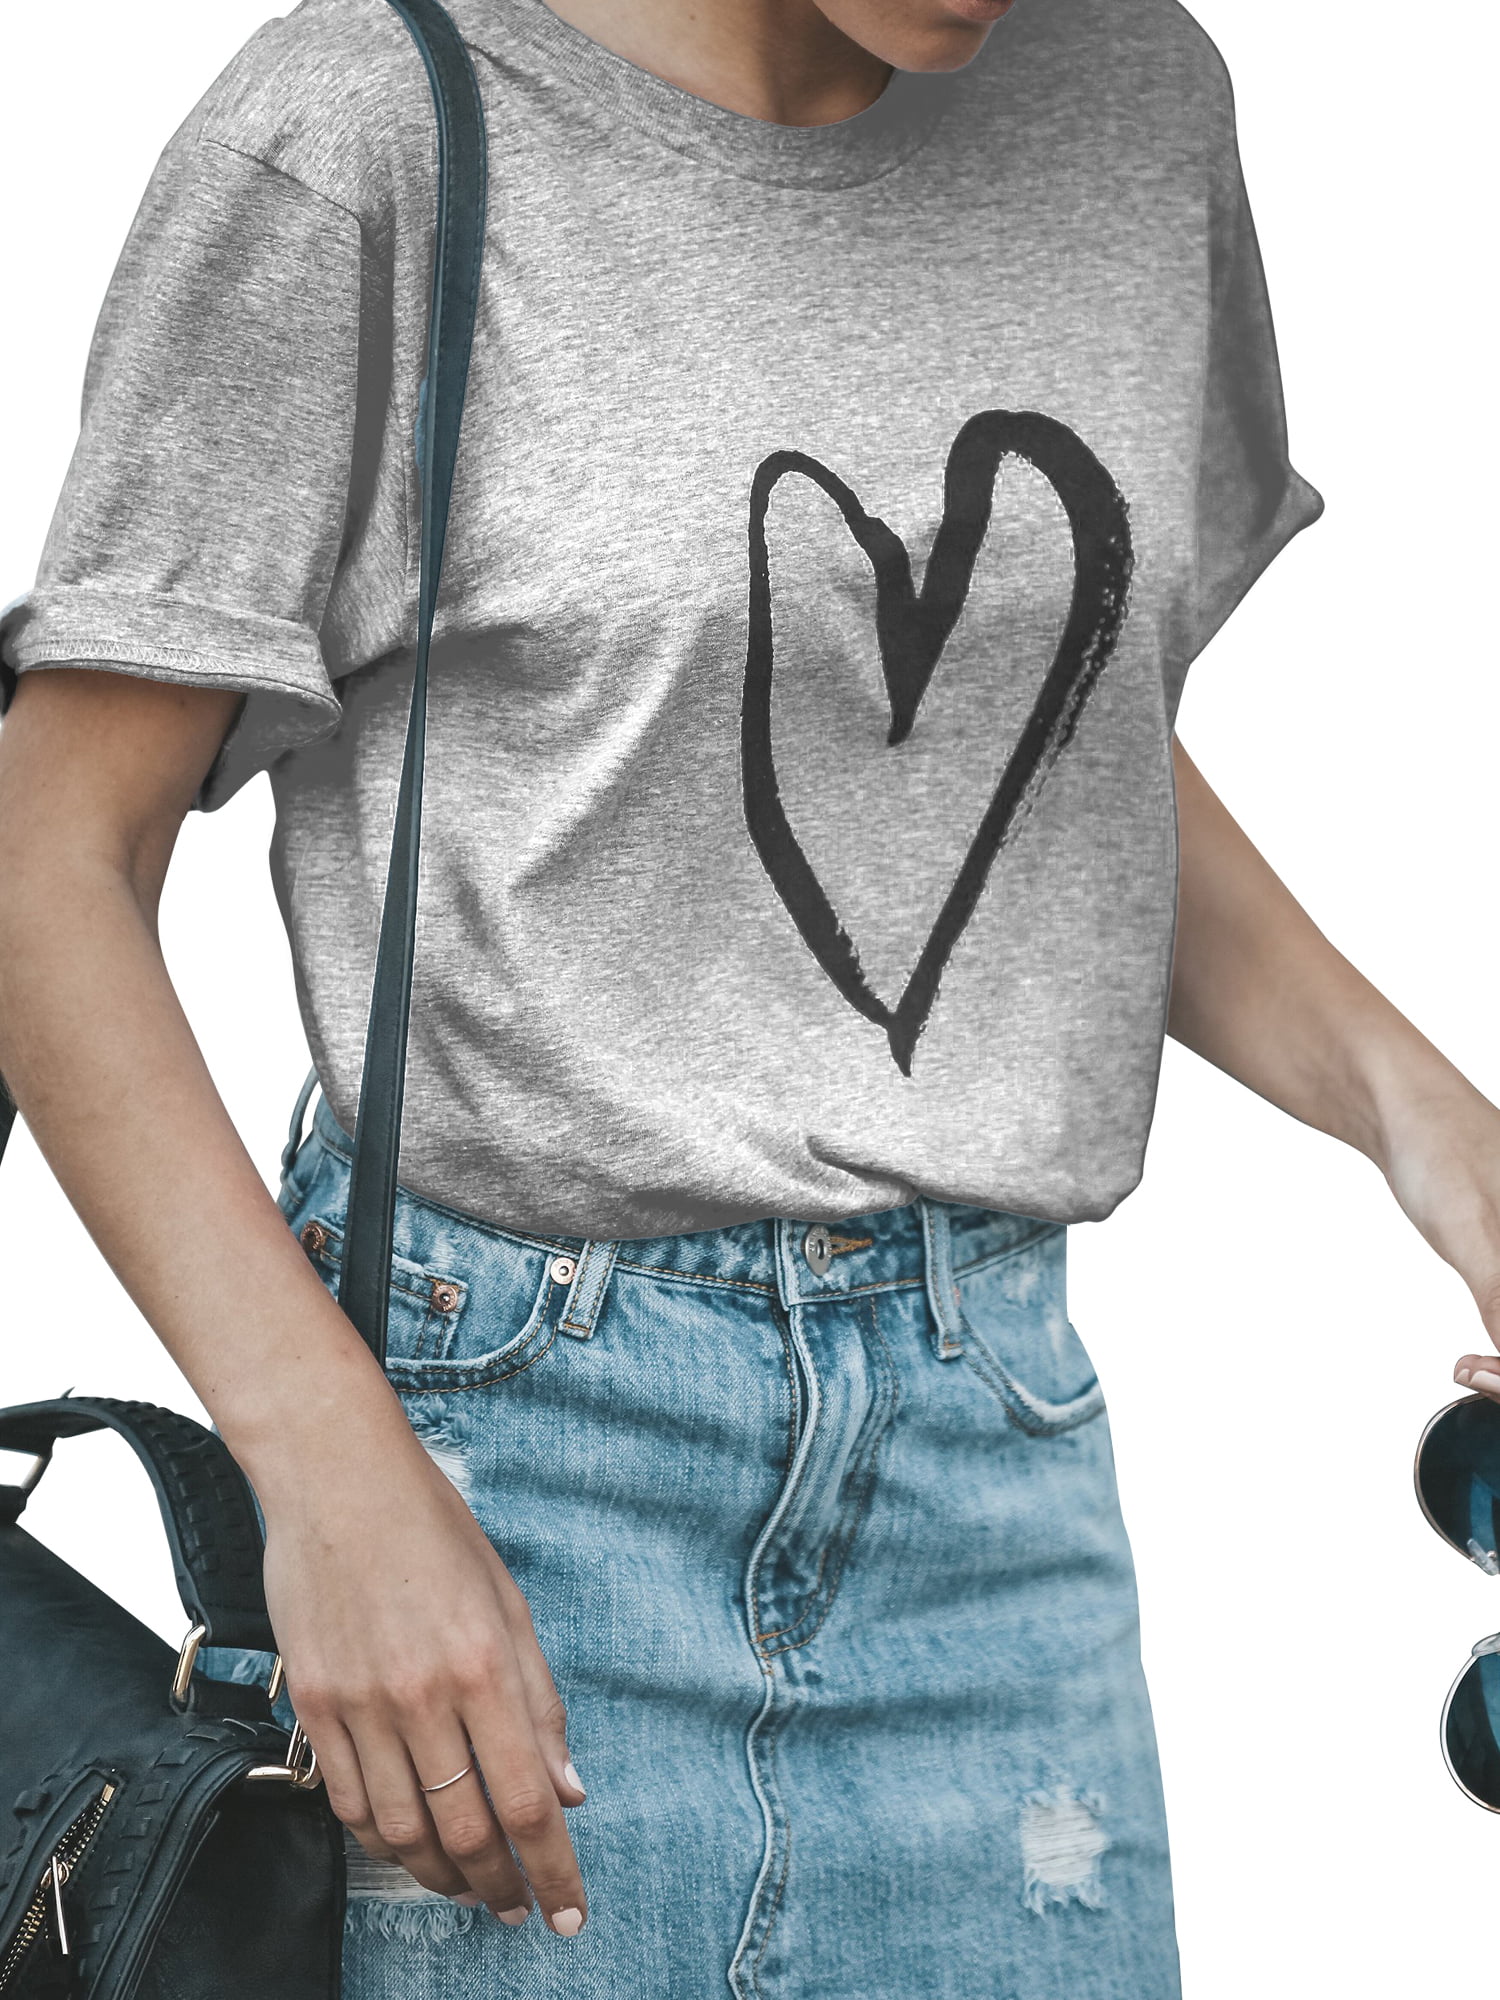 Fashion Women Ladies Short Sleeve T Shirt Tops Blouse Heart Printed Casual Tee